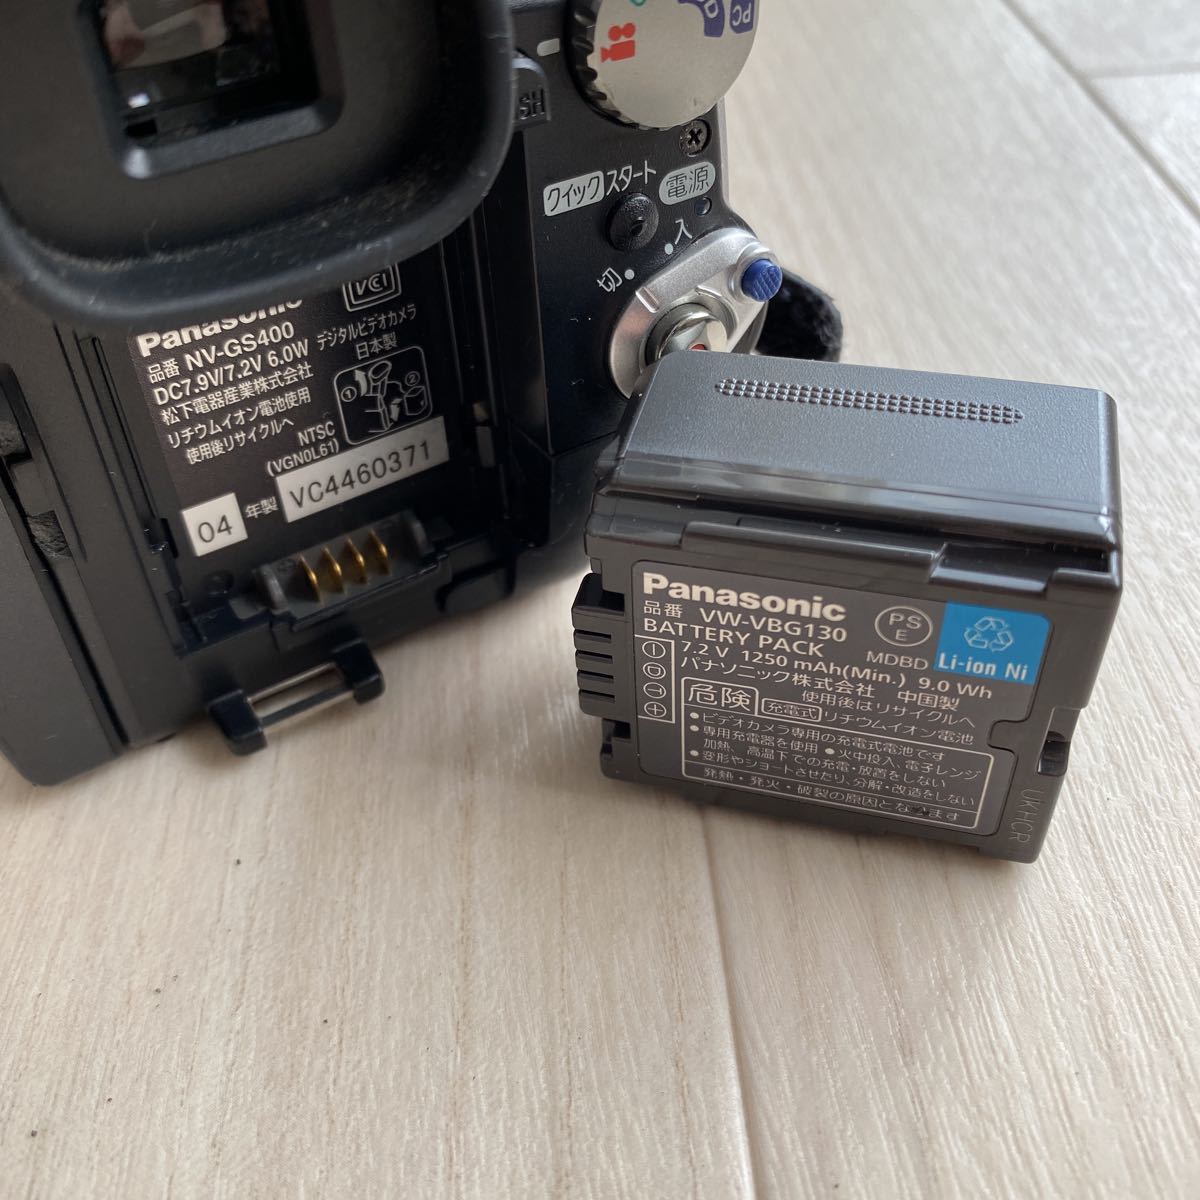 Panasonic ビデオカメラ NV-GS400 【名入れ無料】 - ビデオカメラ